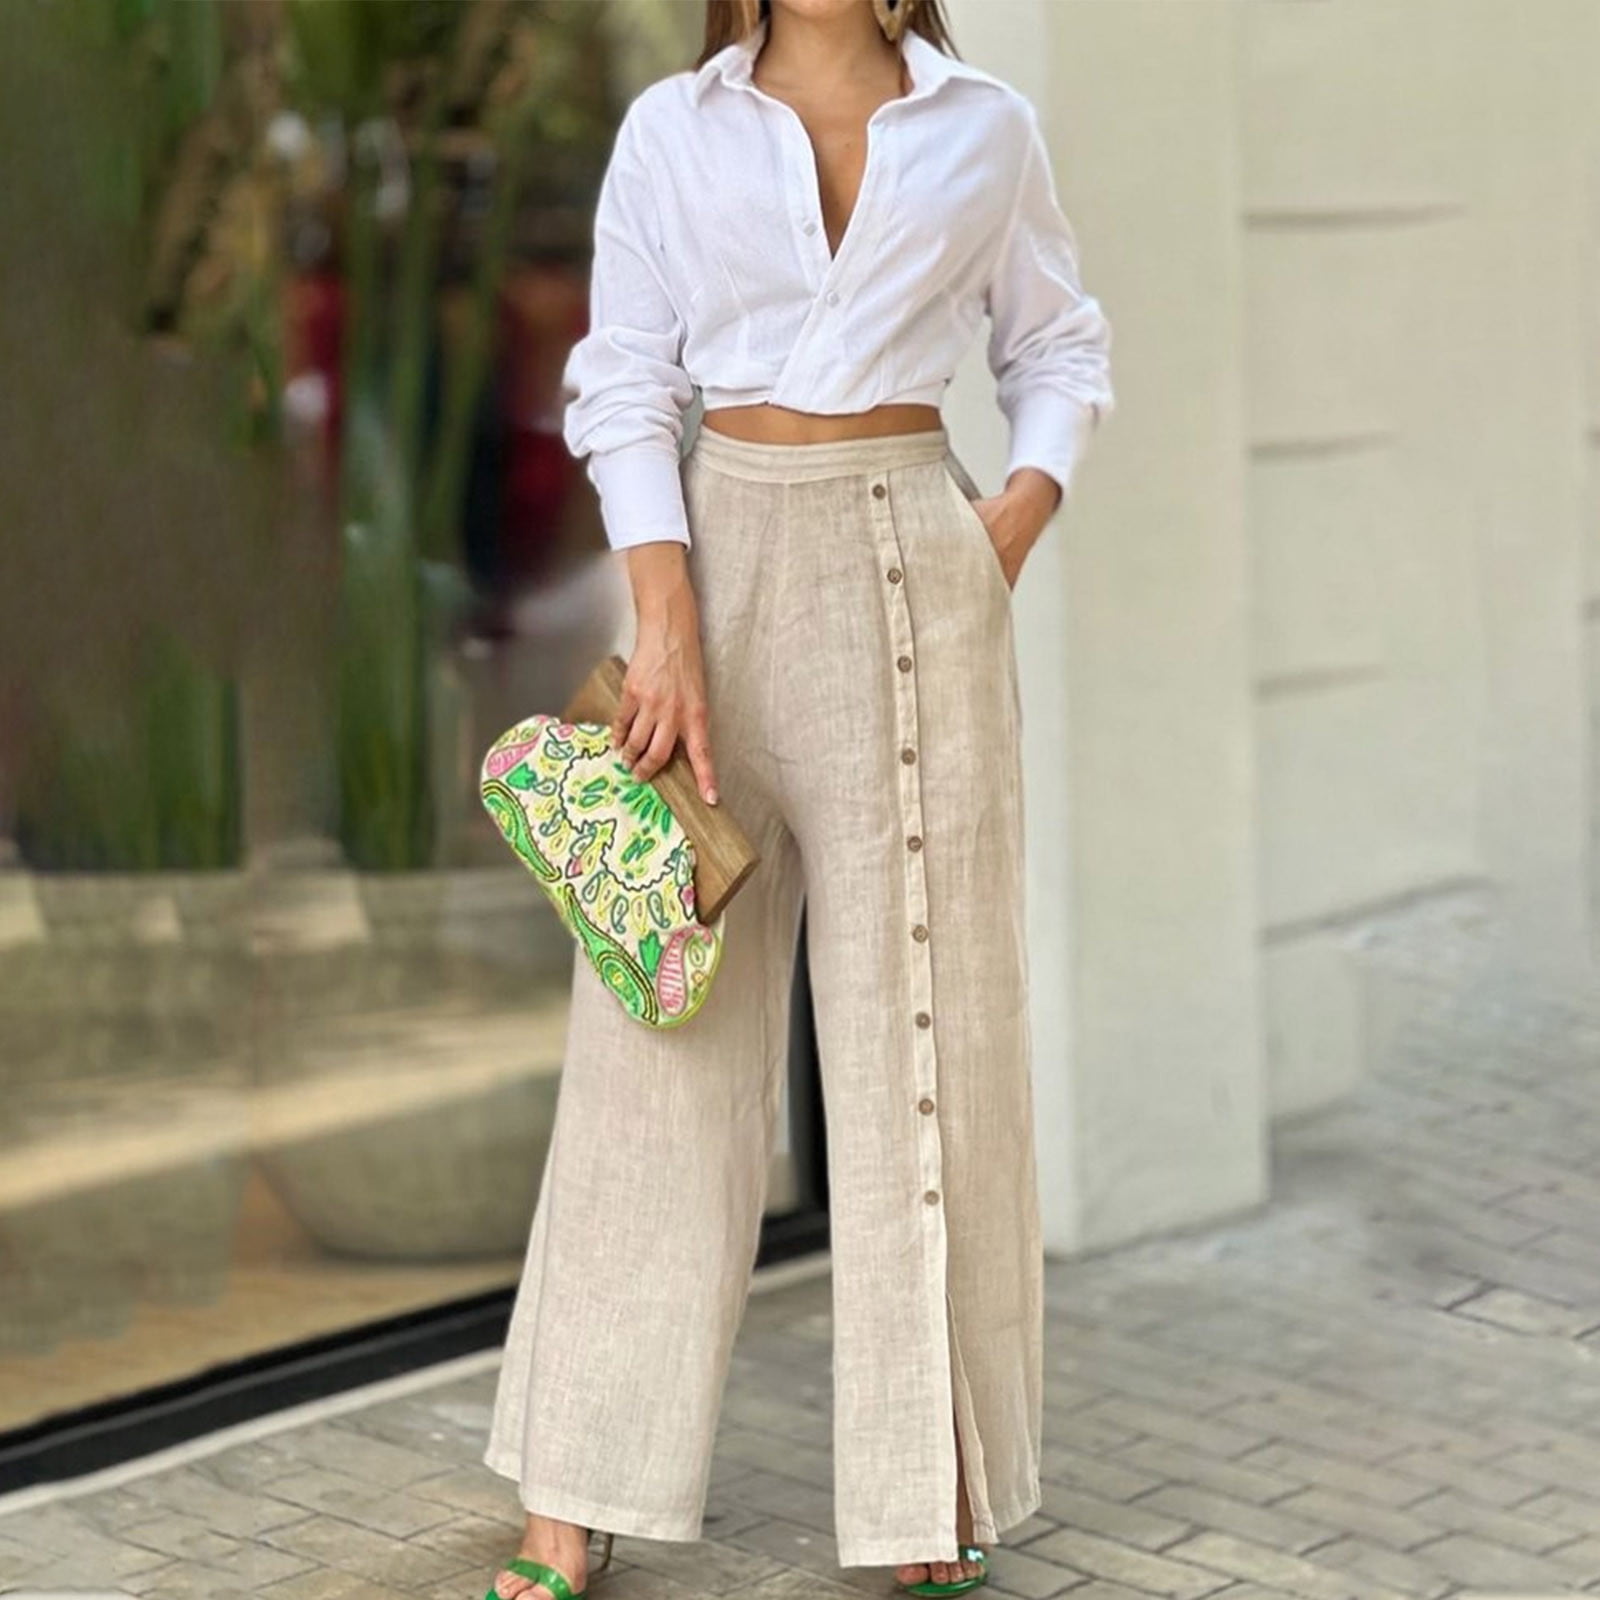 qolati 2 Piece Outfits for Women Lounge Matching Sets Cotton Linen